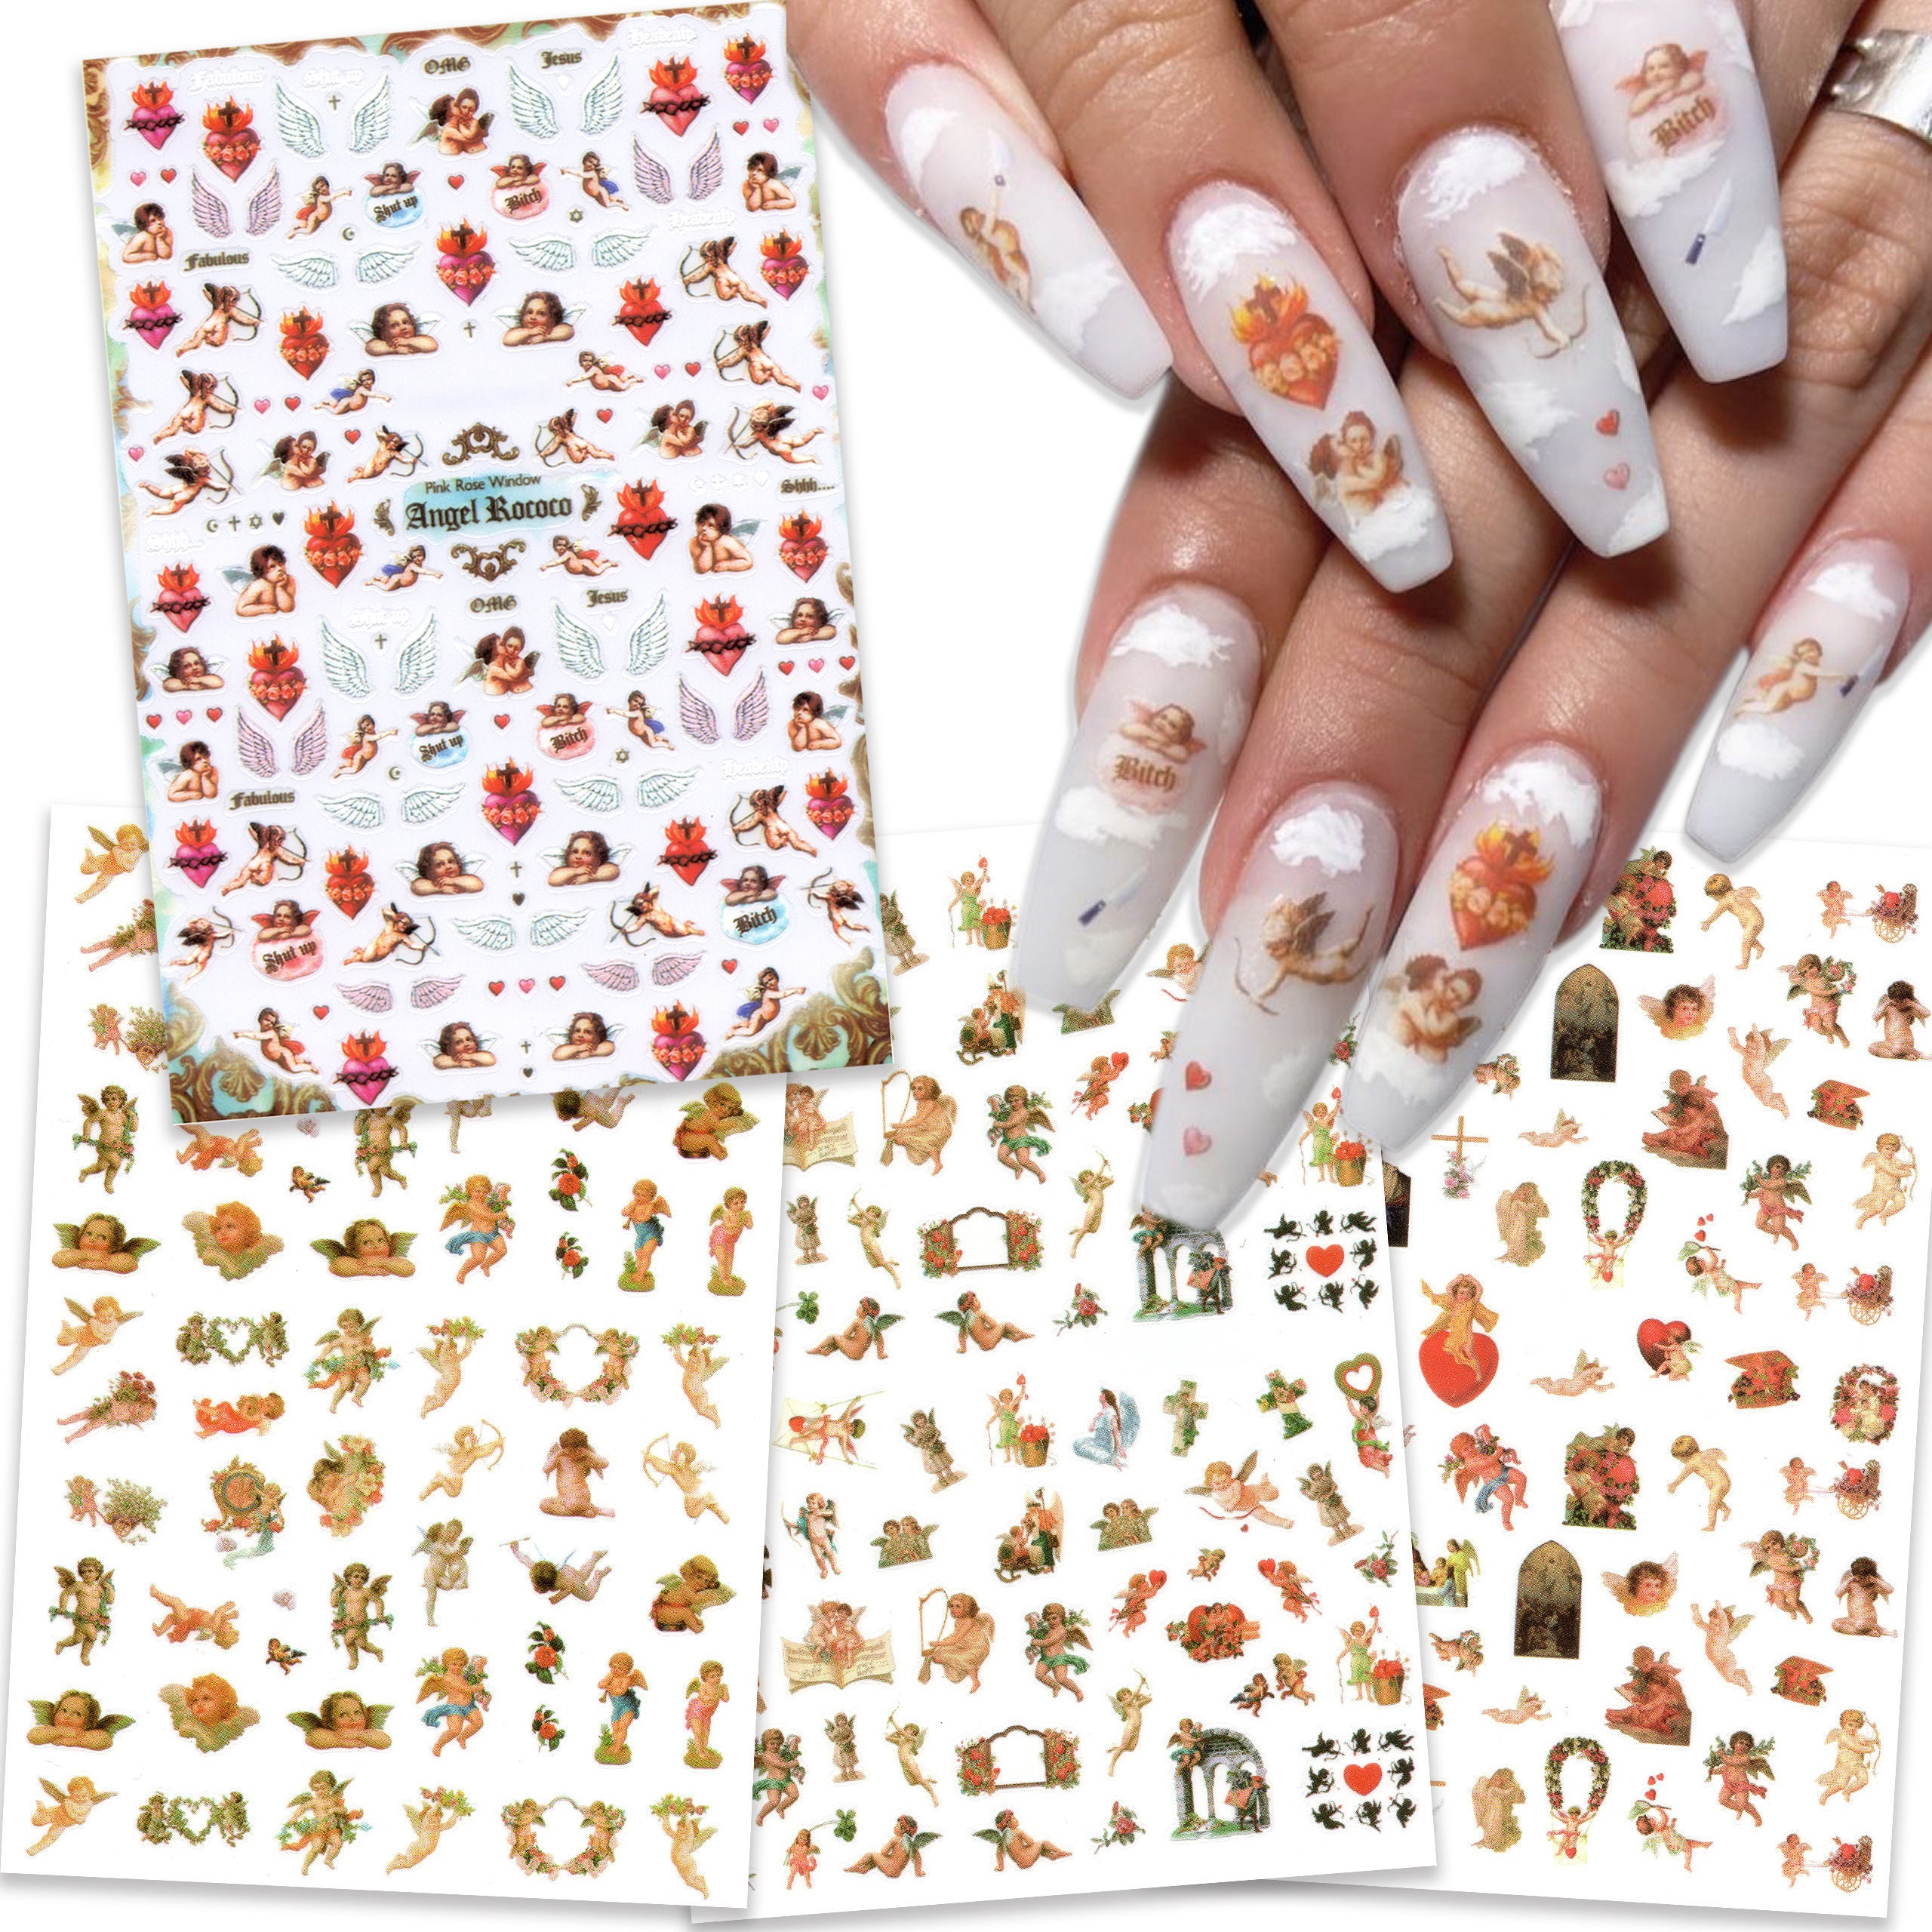 Choose Stickers or Waterslide nail decals Cherubs Holy Painting Angels water transfer Nail Stickers watersliders